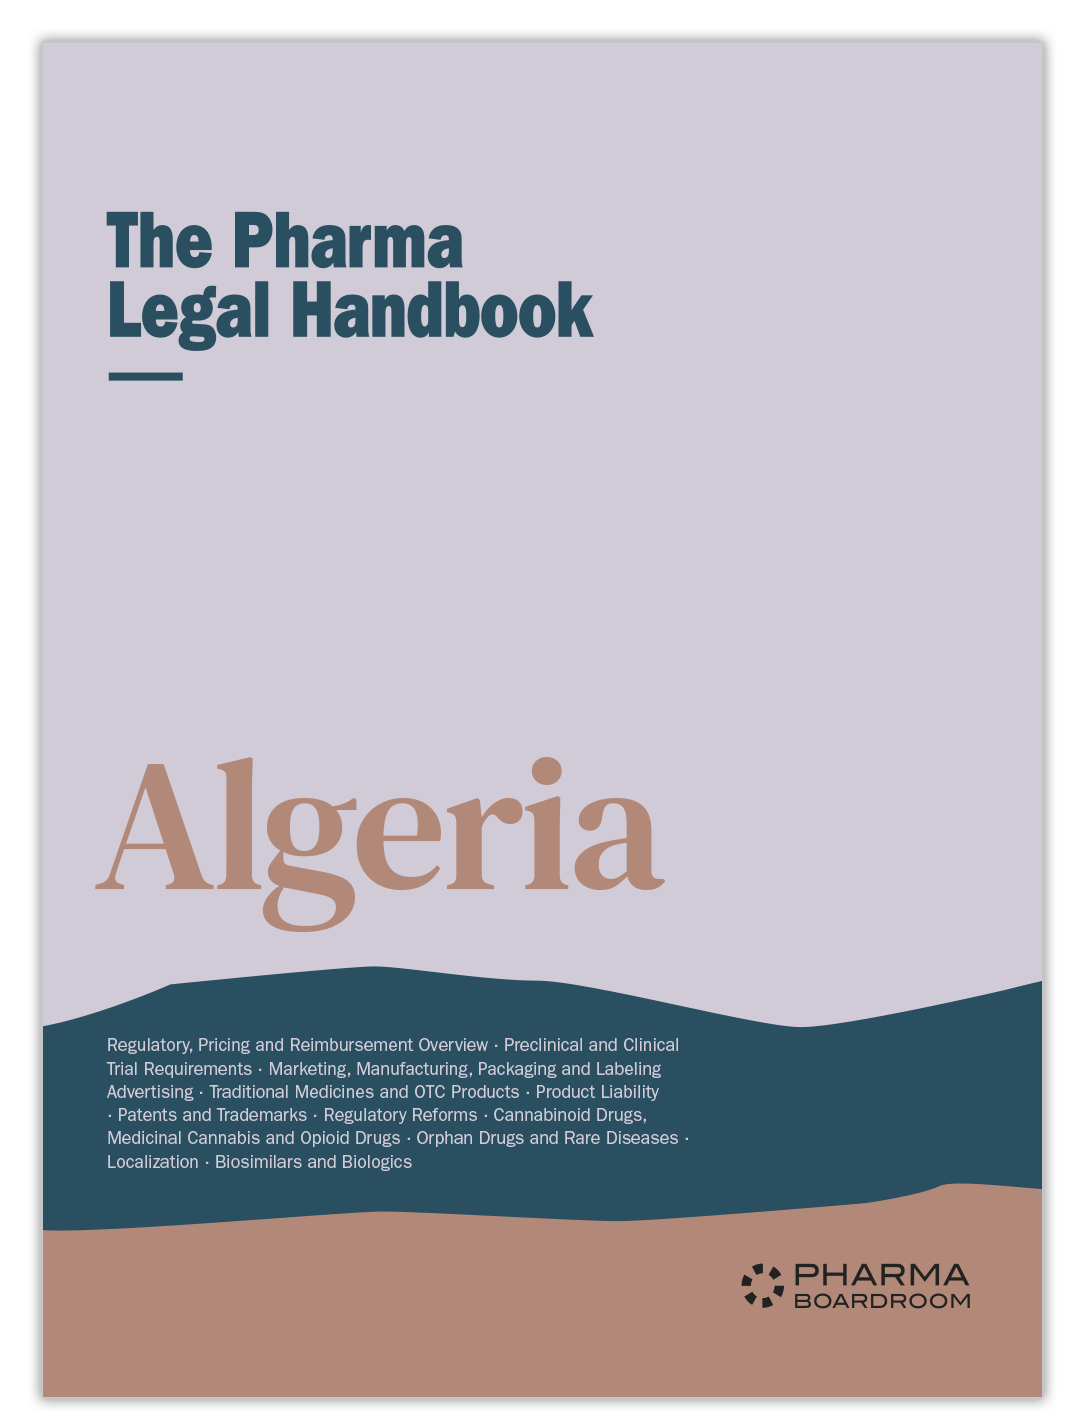 The Pharma Legal Handbook: Algeria